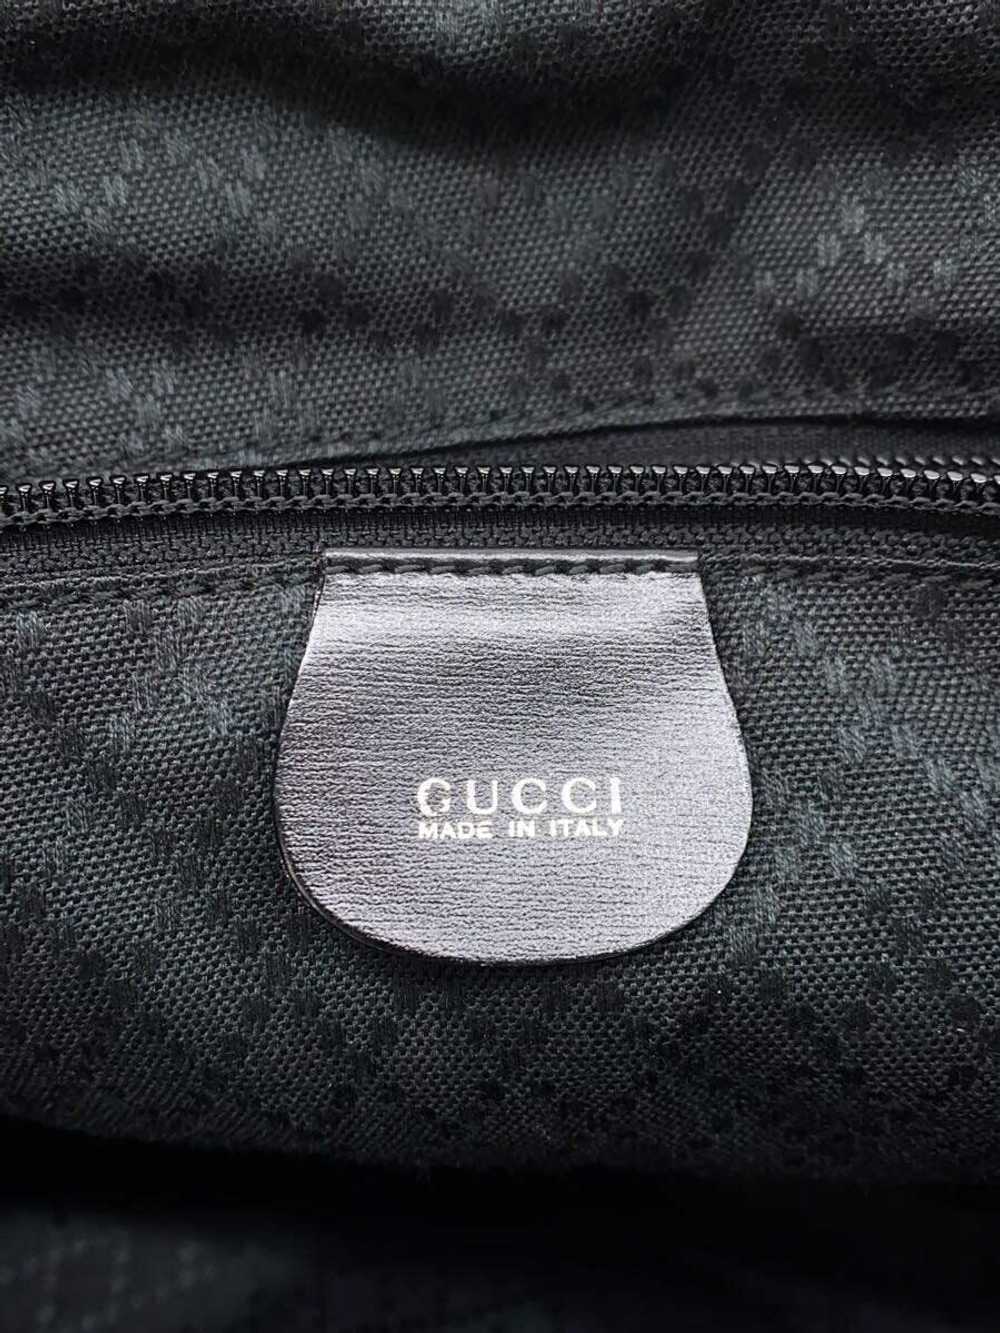 Used Gucci Boston Bag/Leather/Blk Bag - image 5